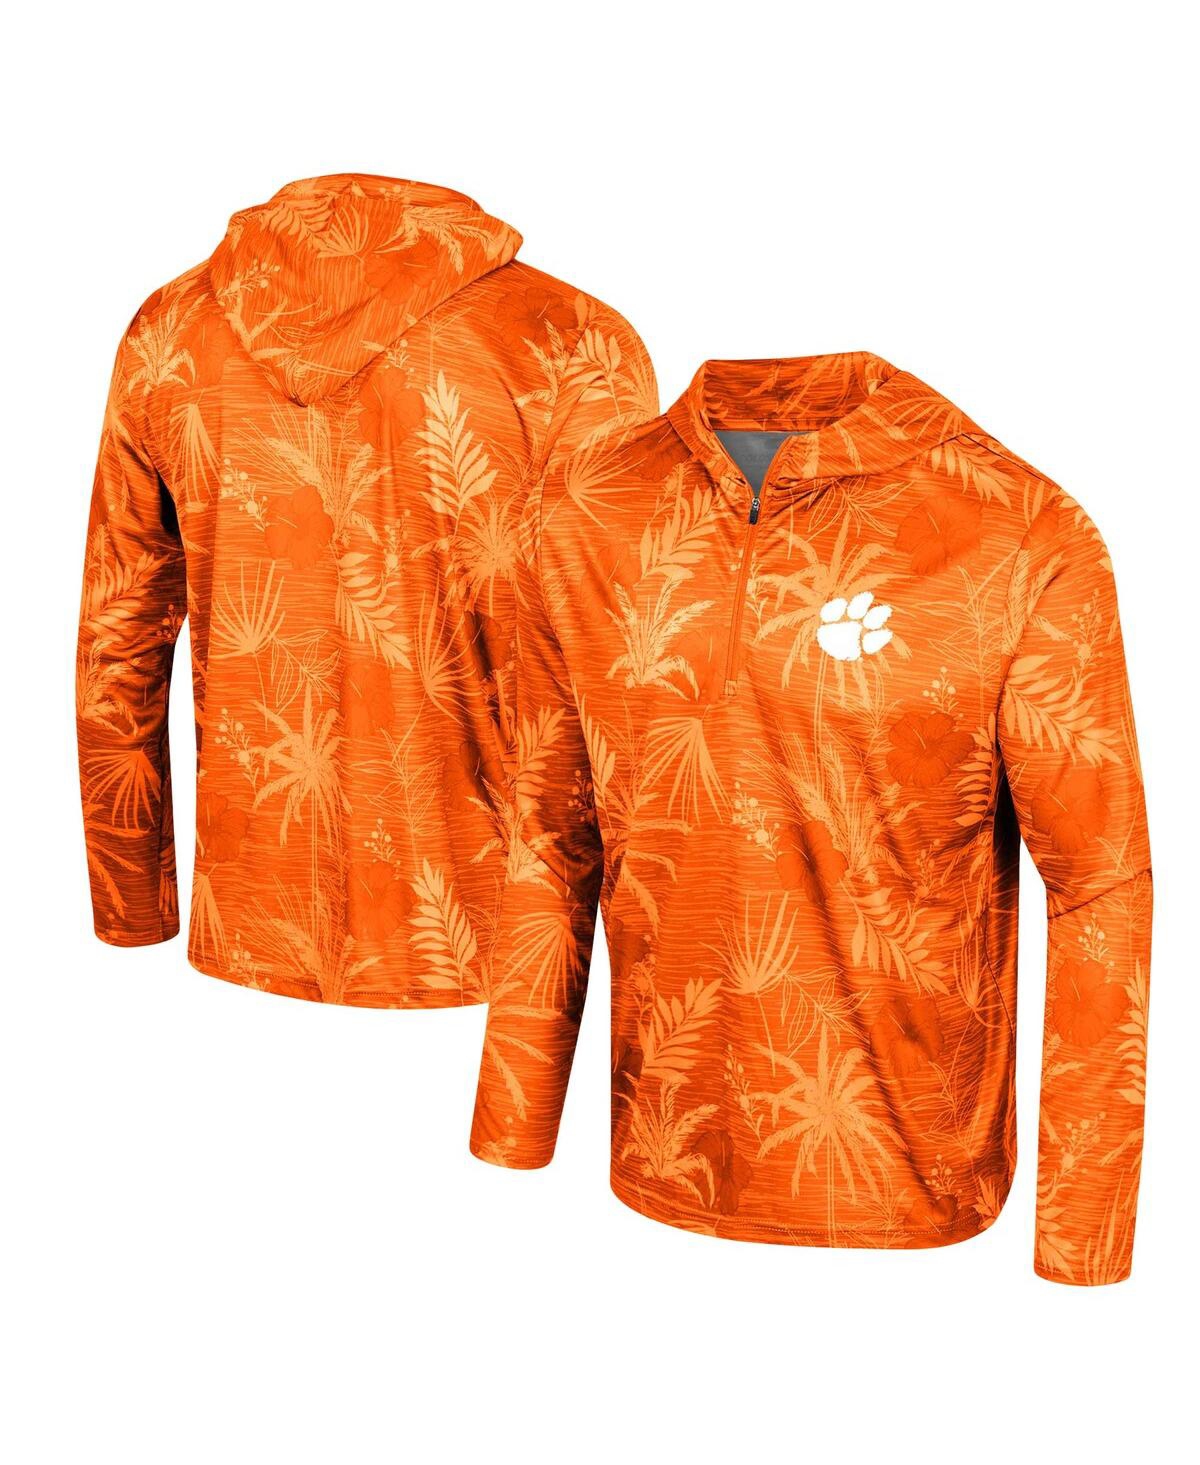 Men's Orange Clemson Tigers Palms Printed Lightweight Quarter-Zip Hooded Top - Orange